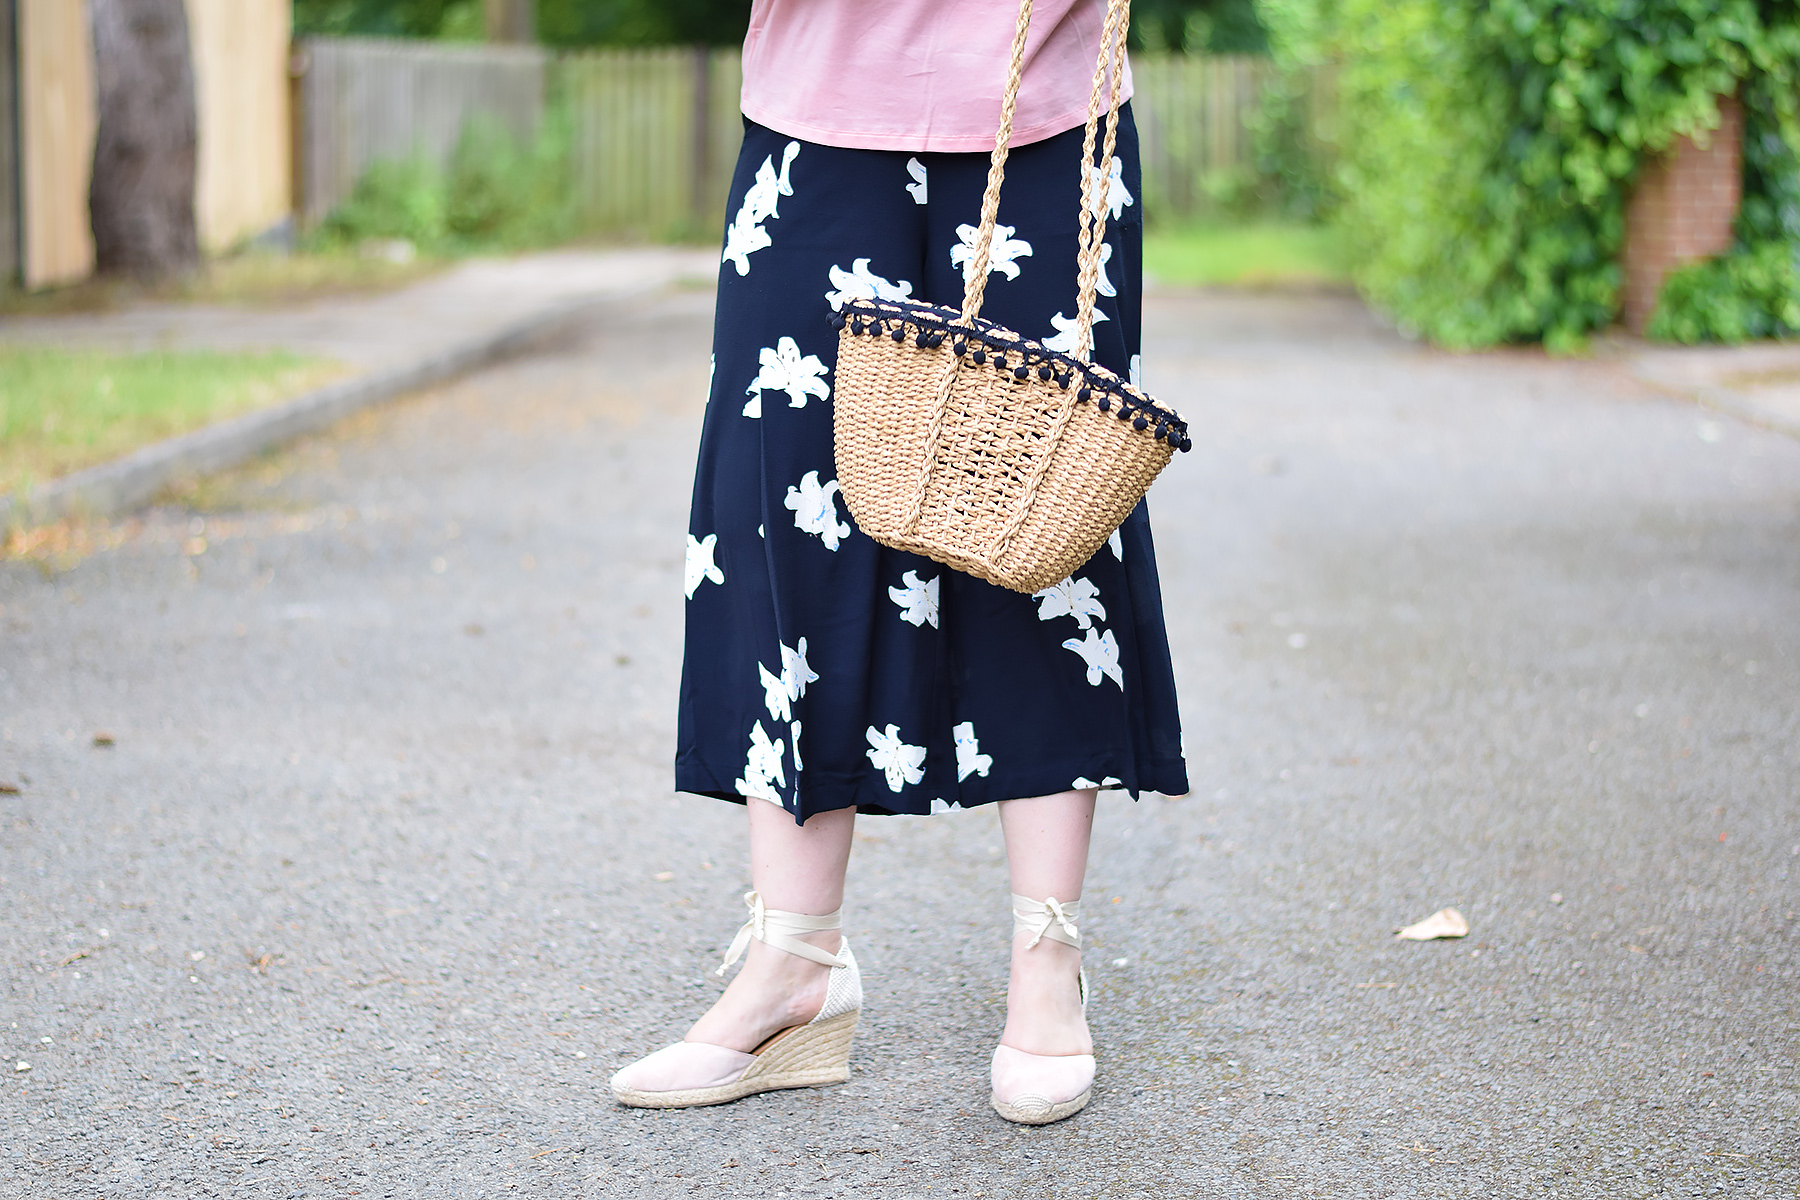 Zara basket bag with pom pom trim and floral culottes